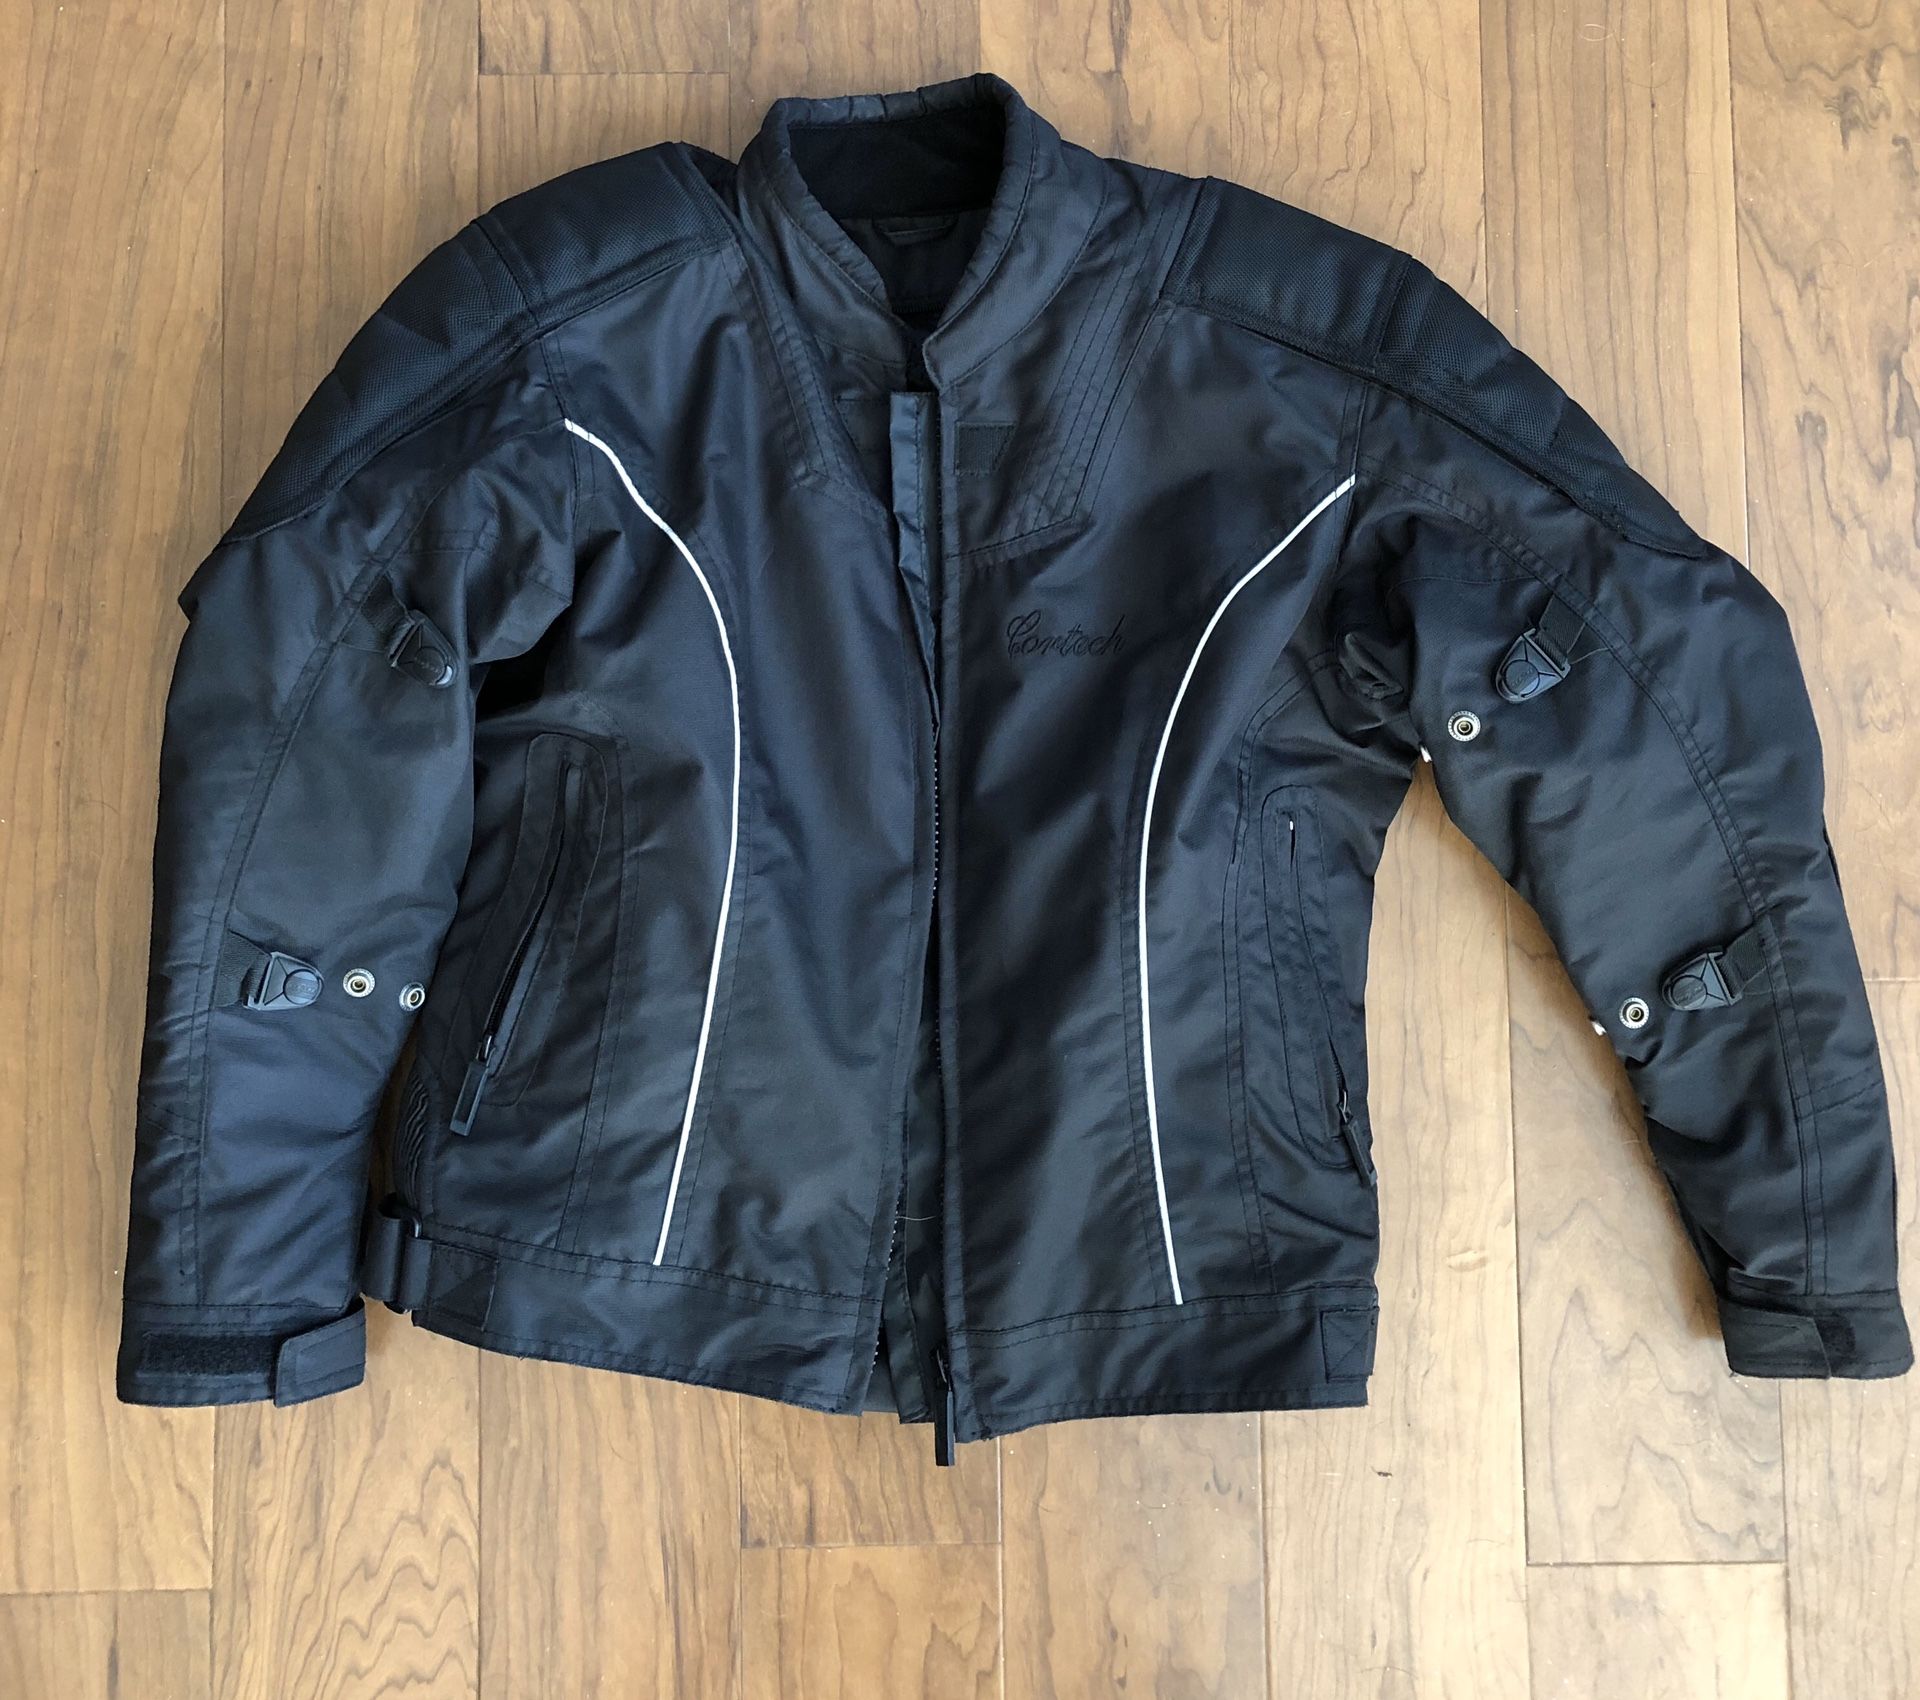 Women’s Cortech Motorcycle Jacket Size XS